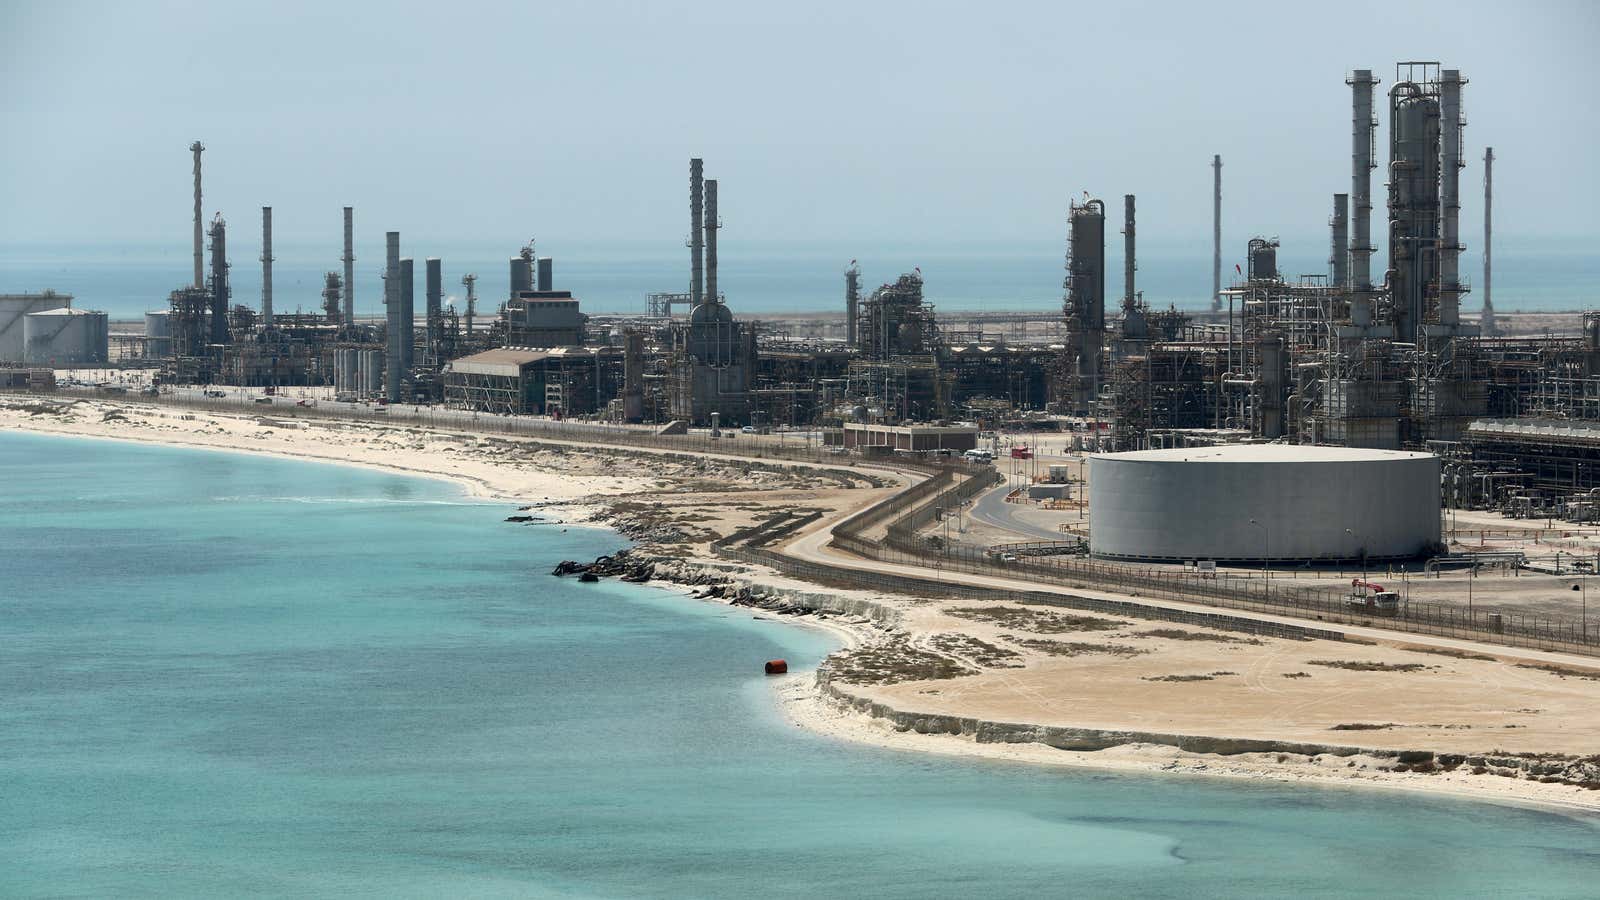 Saudi Aramco’s Ras Tanura oil refinery and oil terminal in Saudi Arabia.